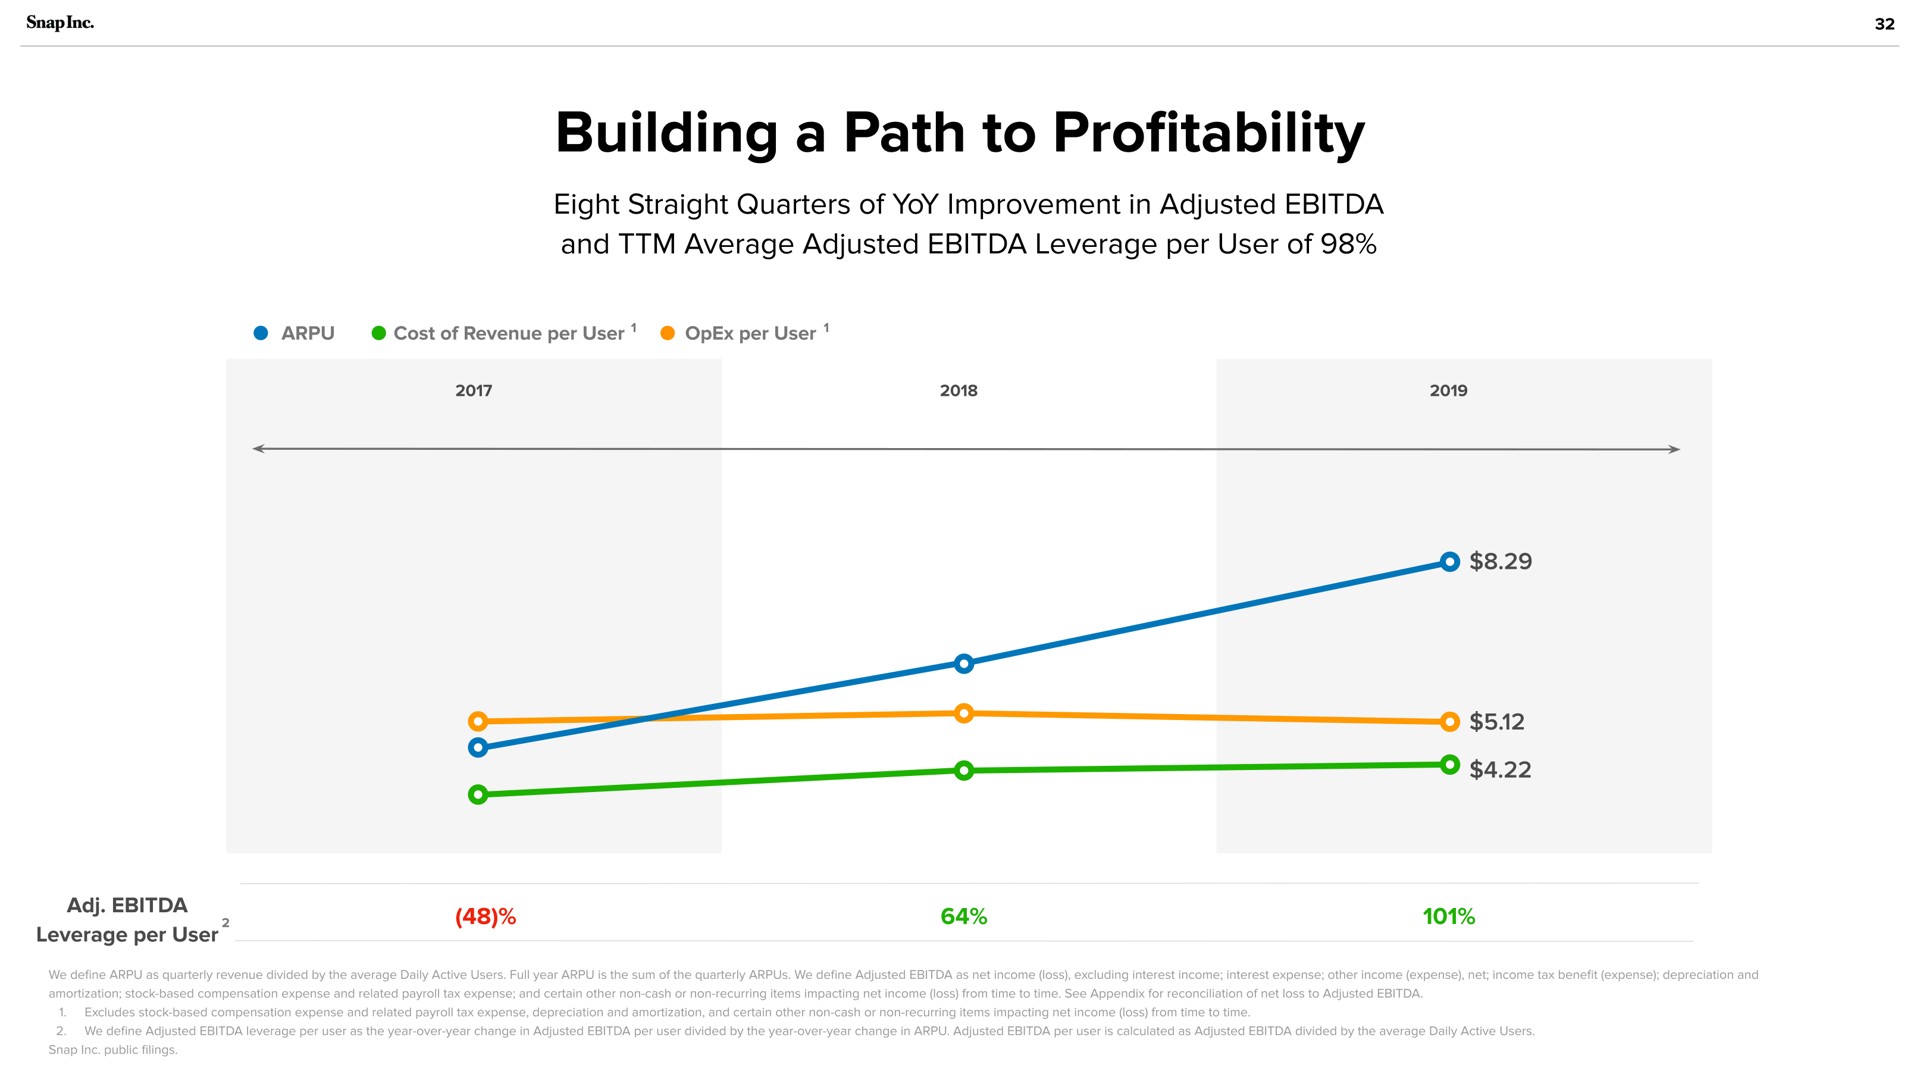 building a path to profitability | Snap Inc